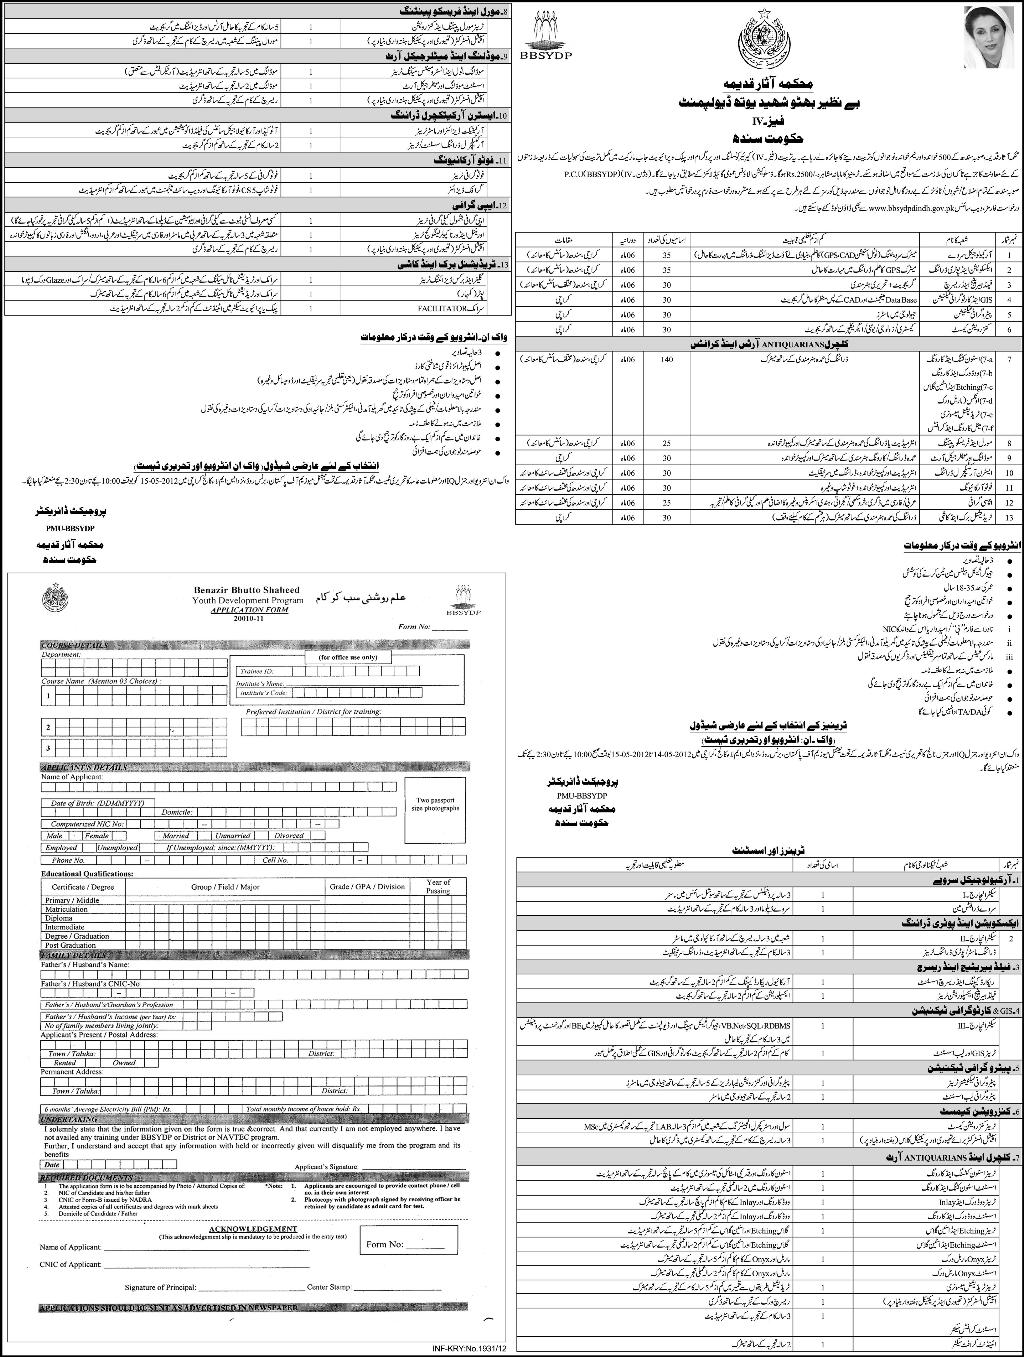 jobs at BBSYDP (Archaelogical Department of Sindh) (Govt. job)